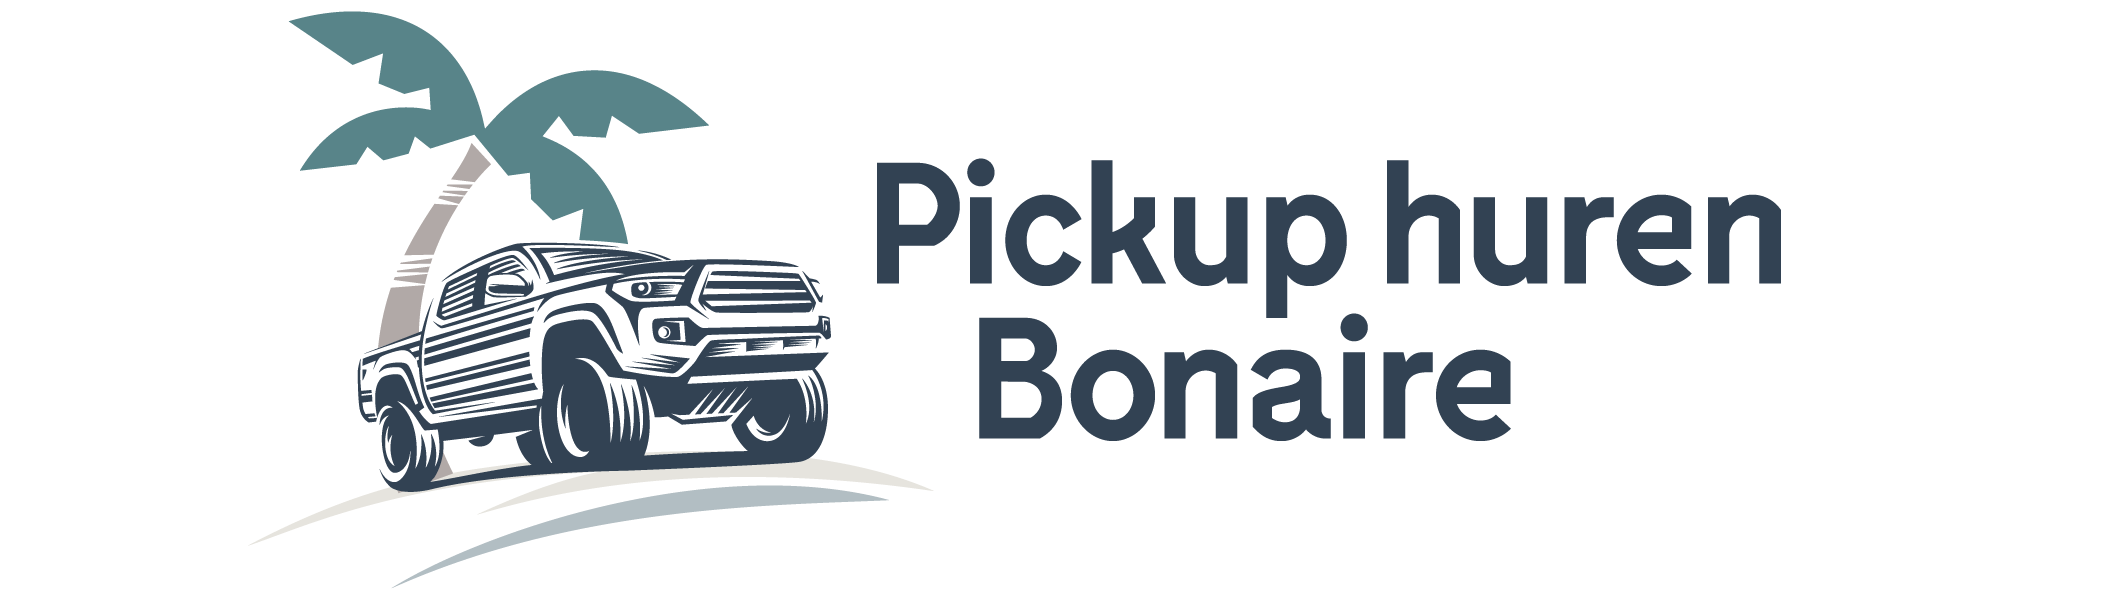 Pickup huren bonaire logo